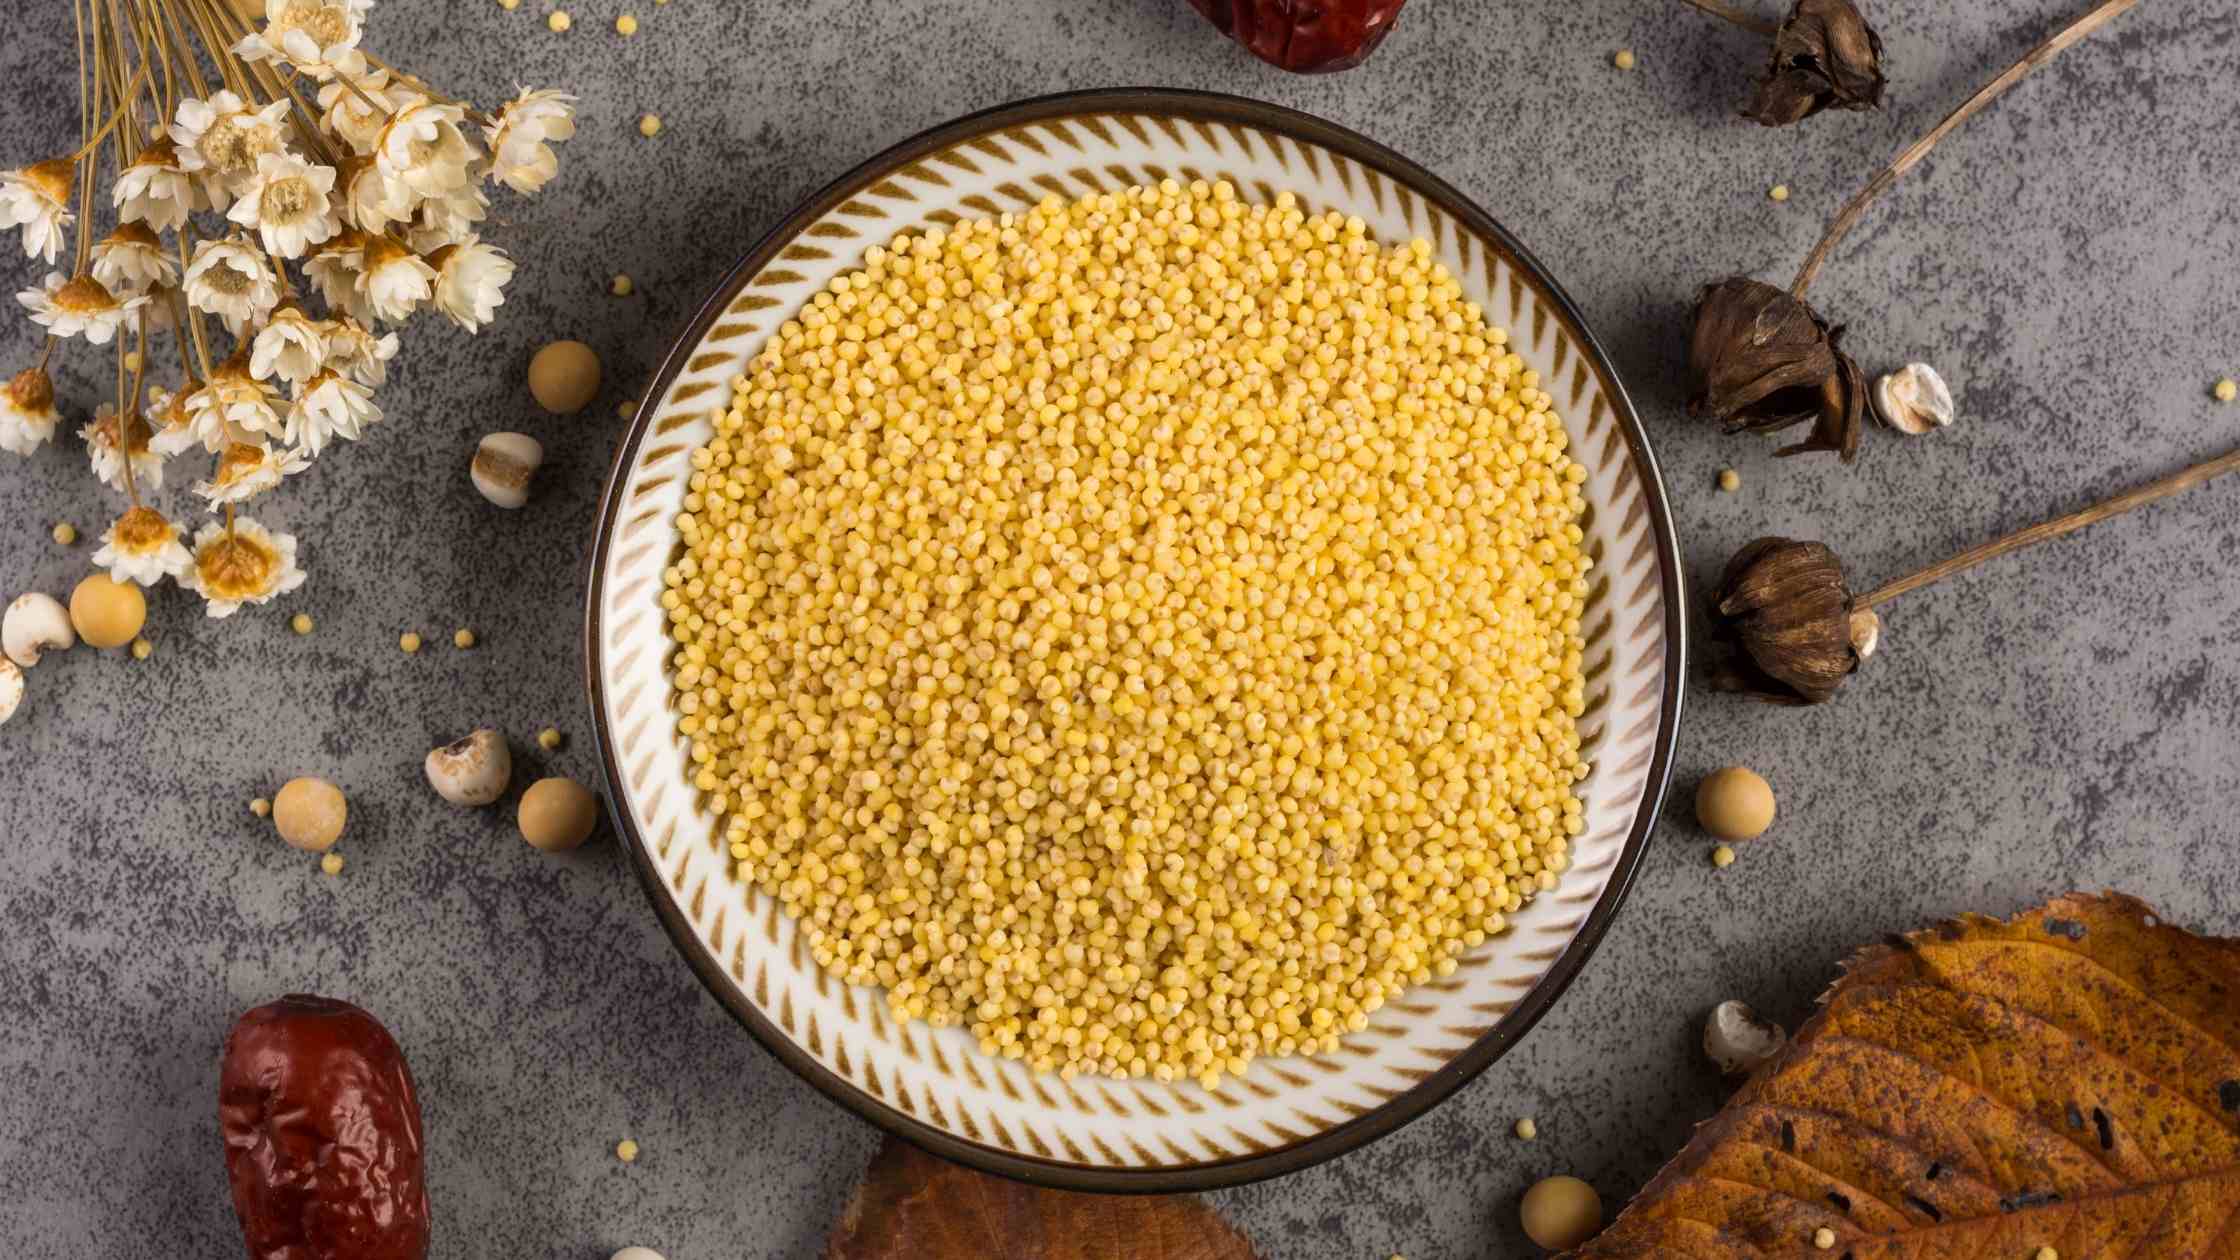 6 Amazing Health Benefits of Proso Millet